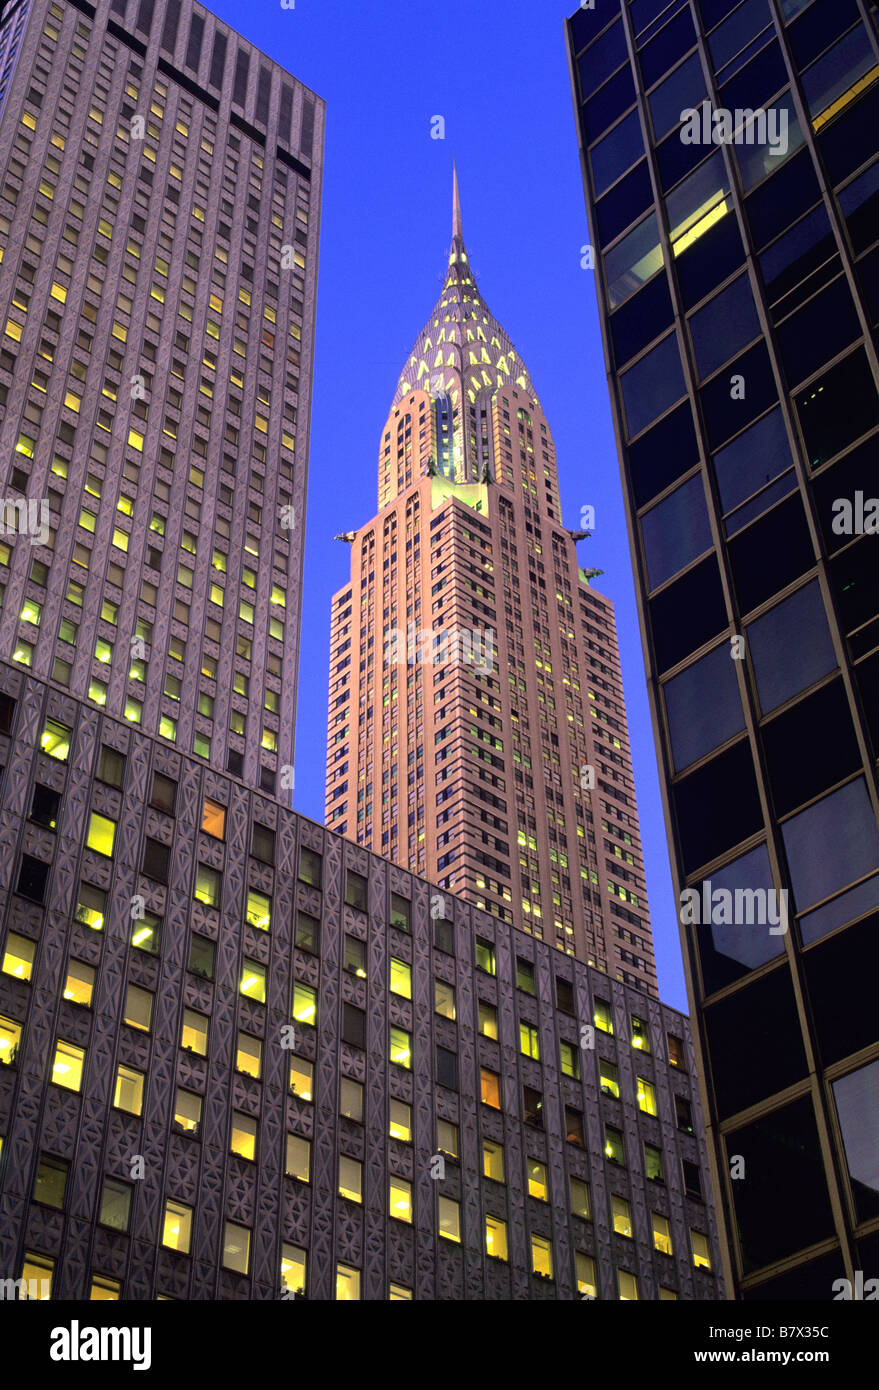 Le Chrysler Building, New York, USA Banque D'Images